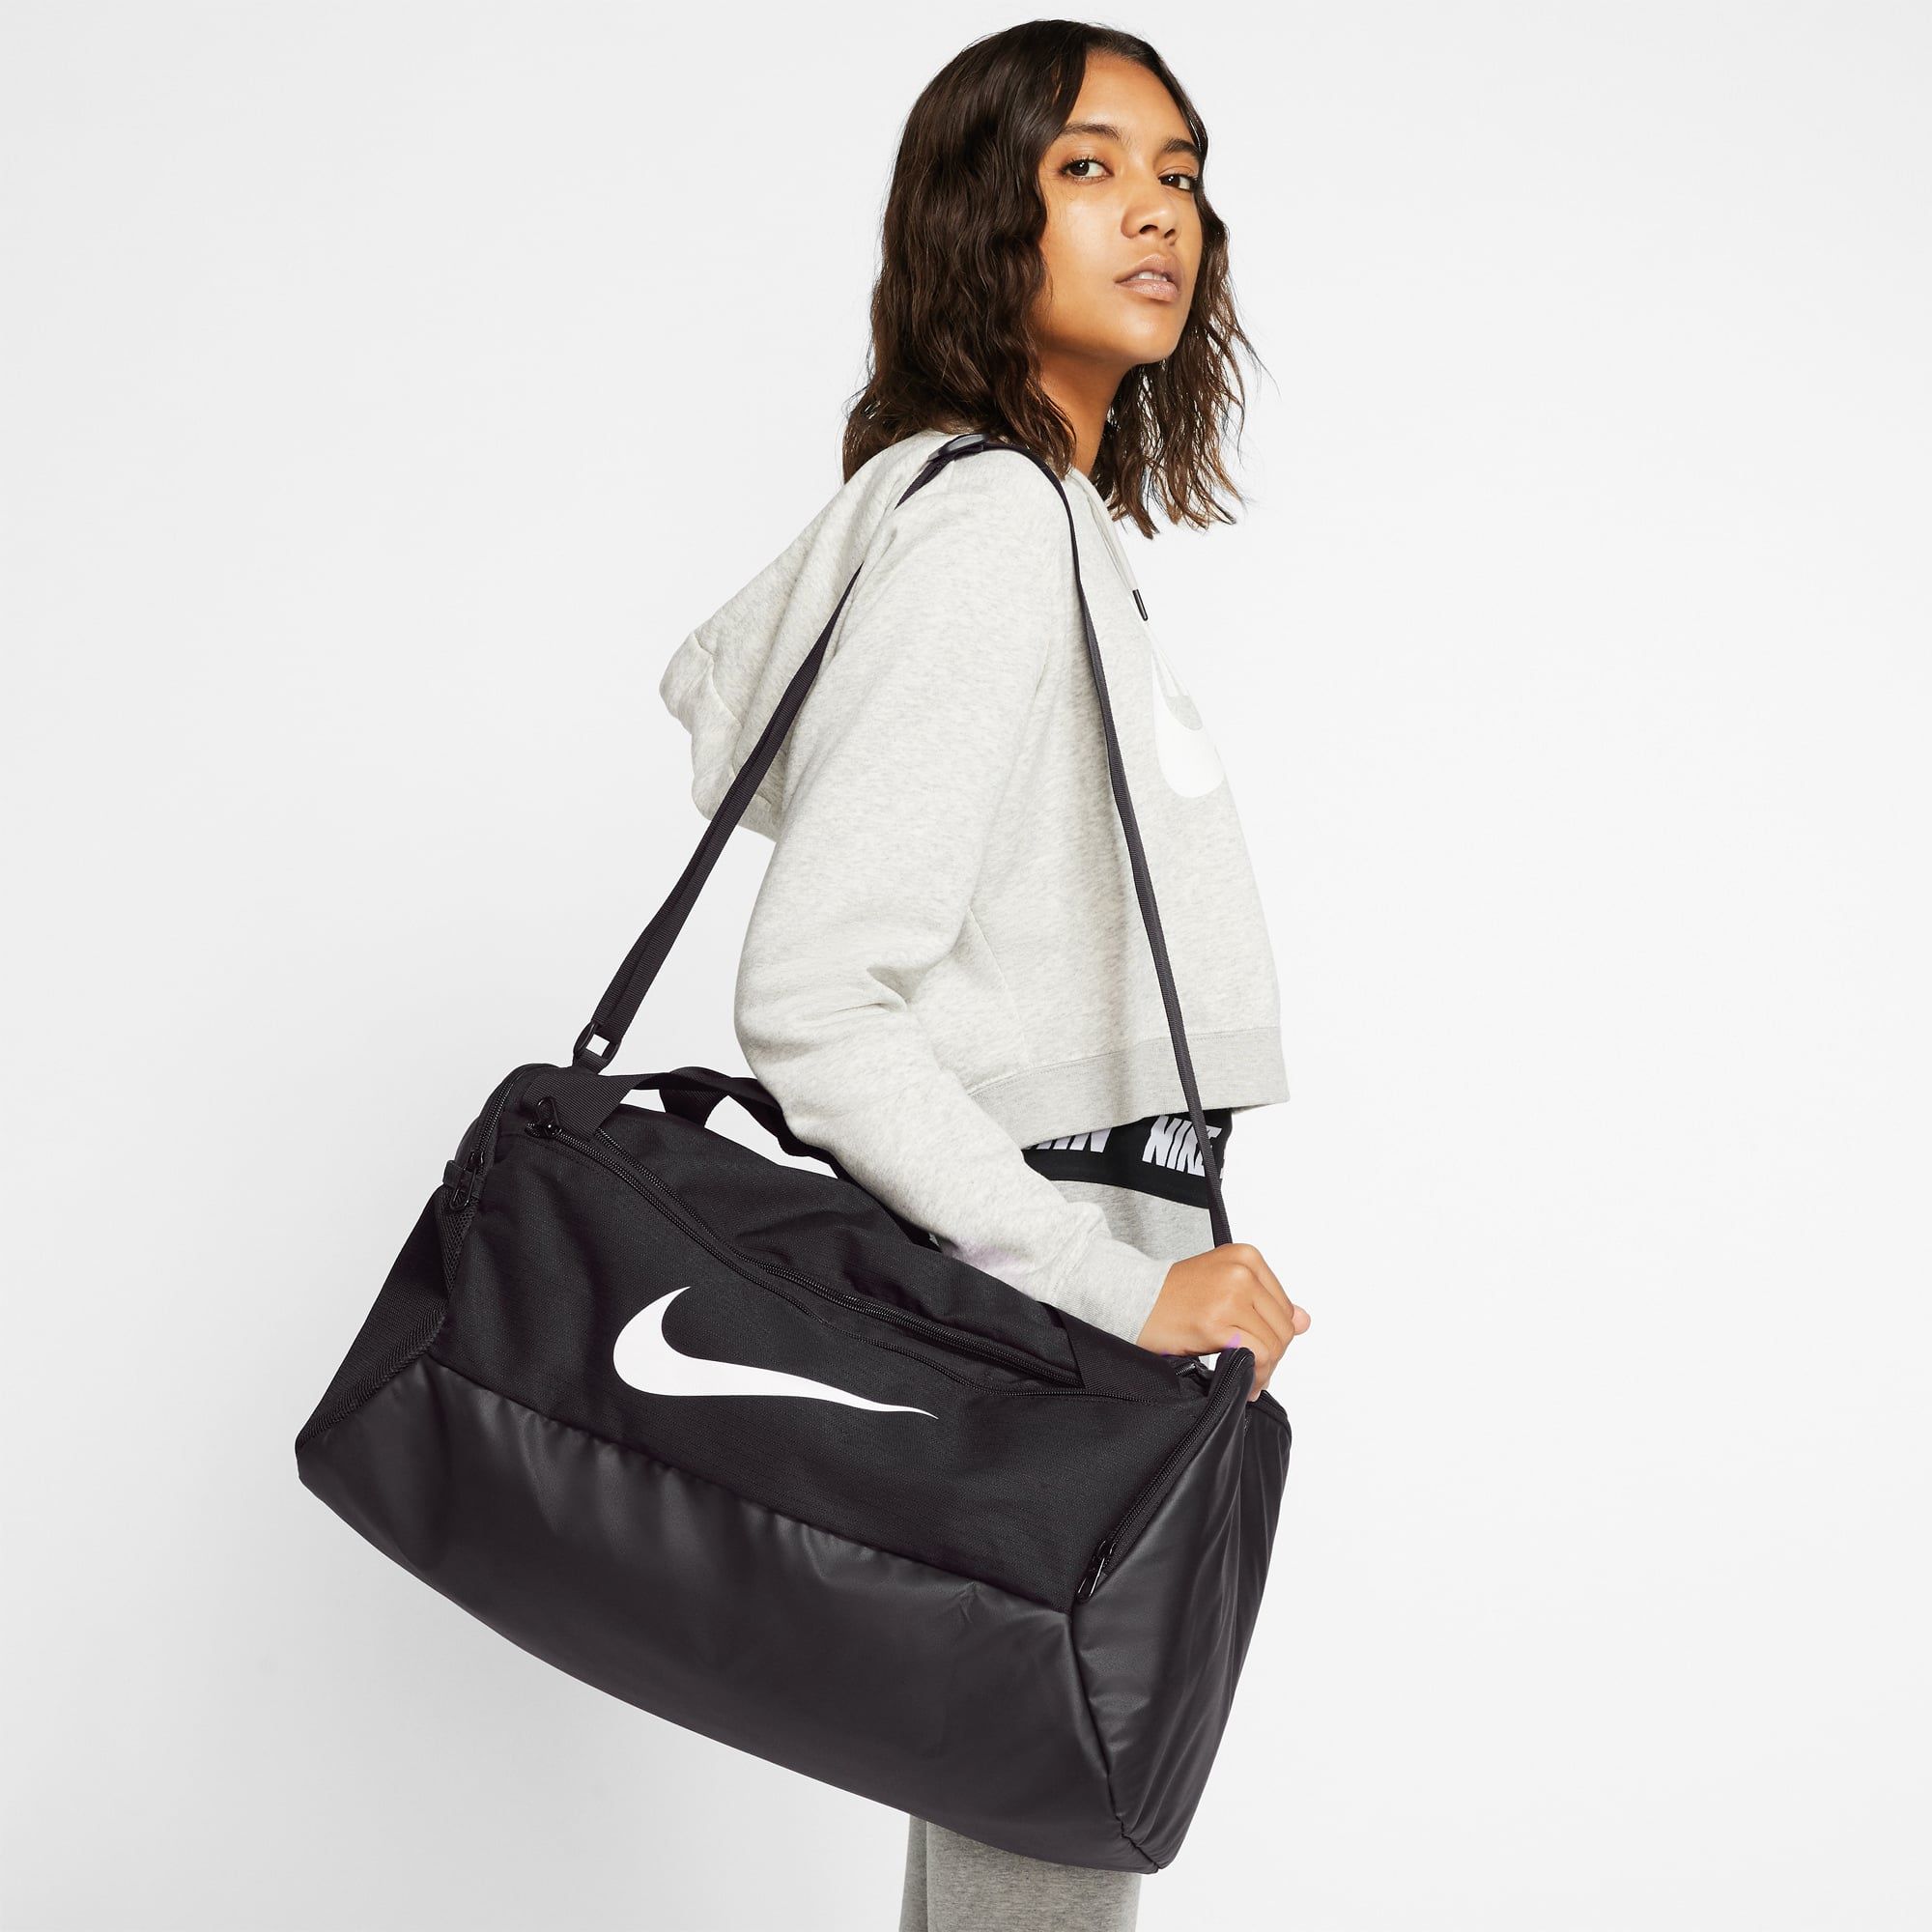 12 Amazing Small Nike Duffel Bag for 2023 | TouristSecrets